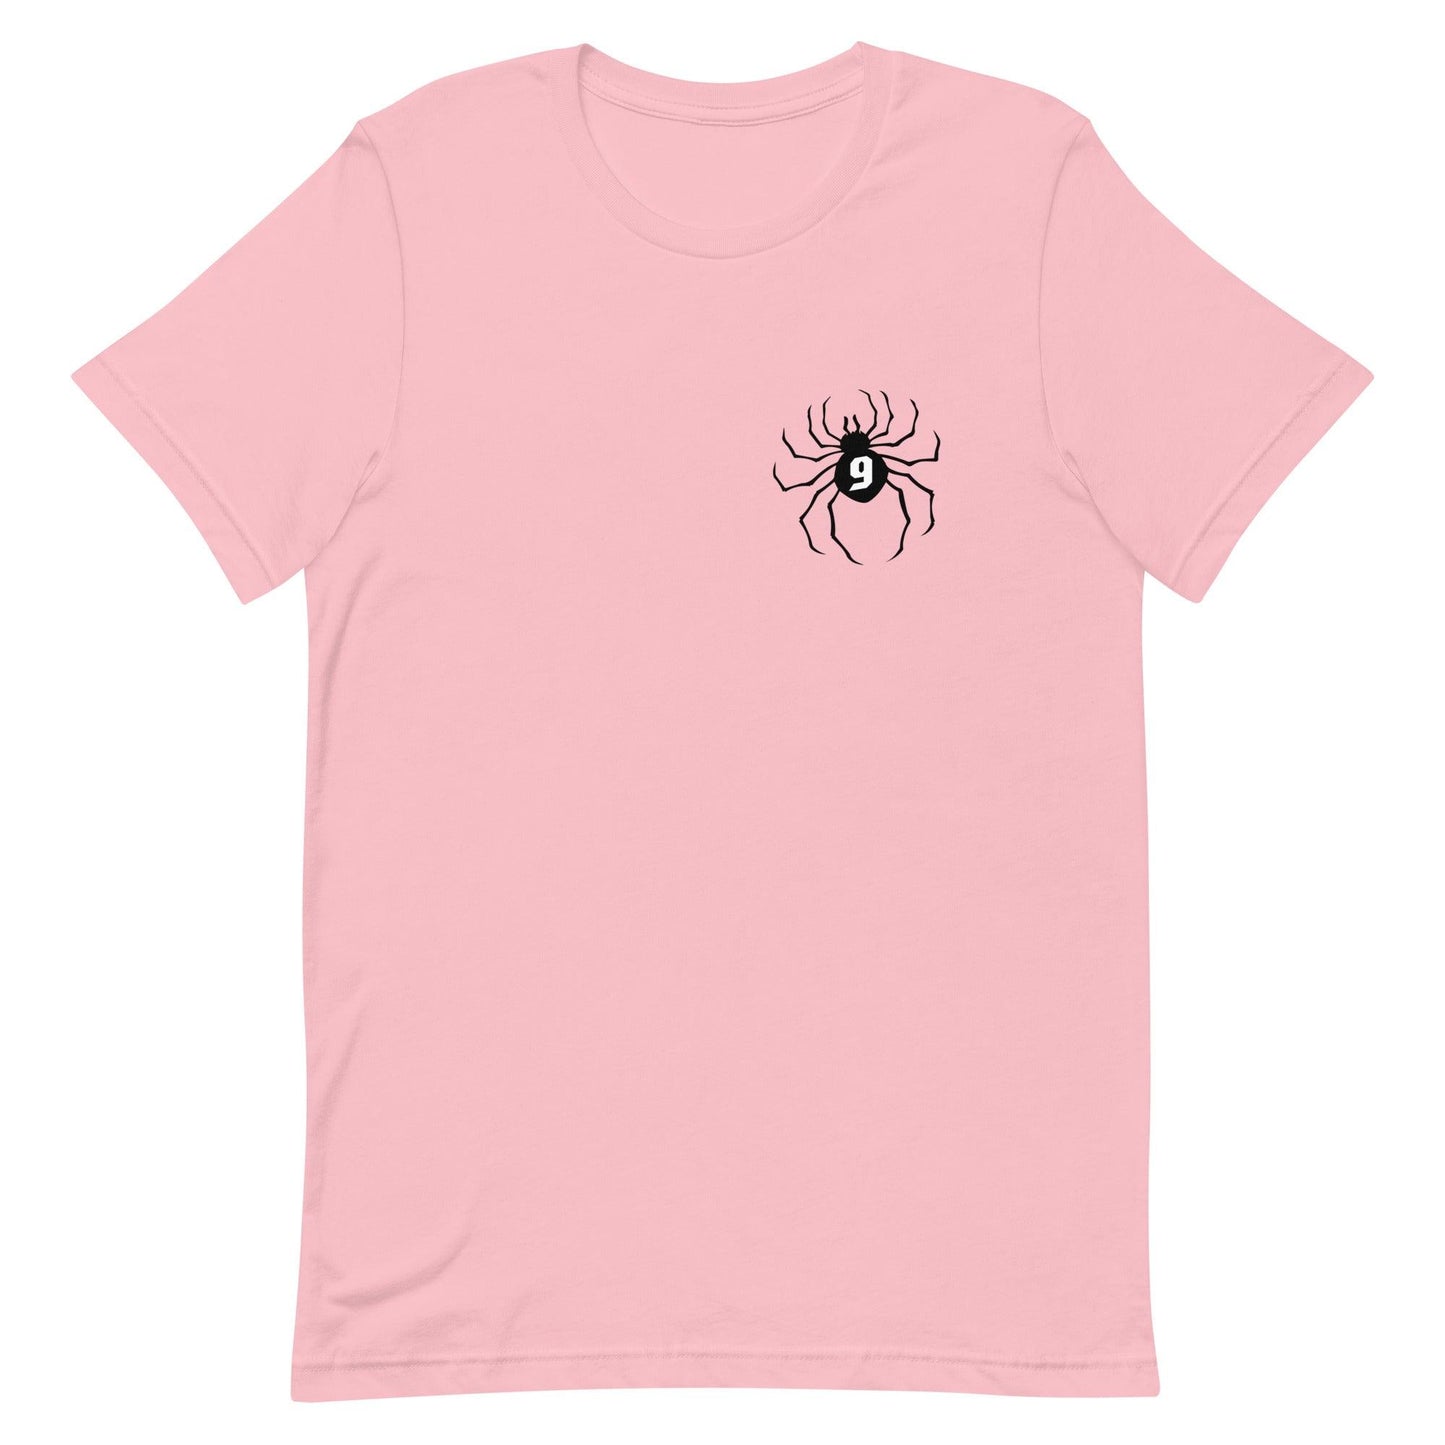 Marquis Dendy "Spider" t-shirt - Fan Arch